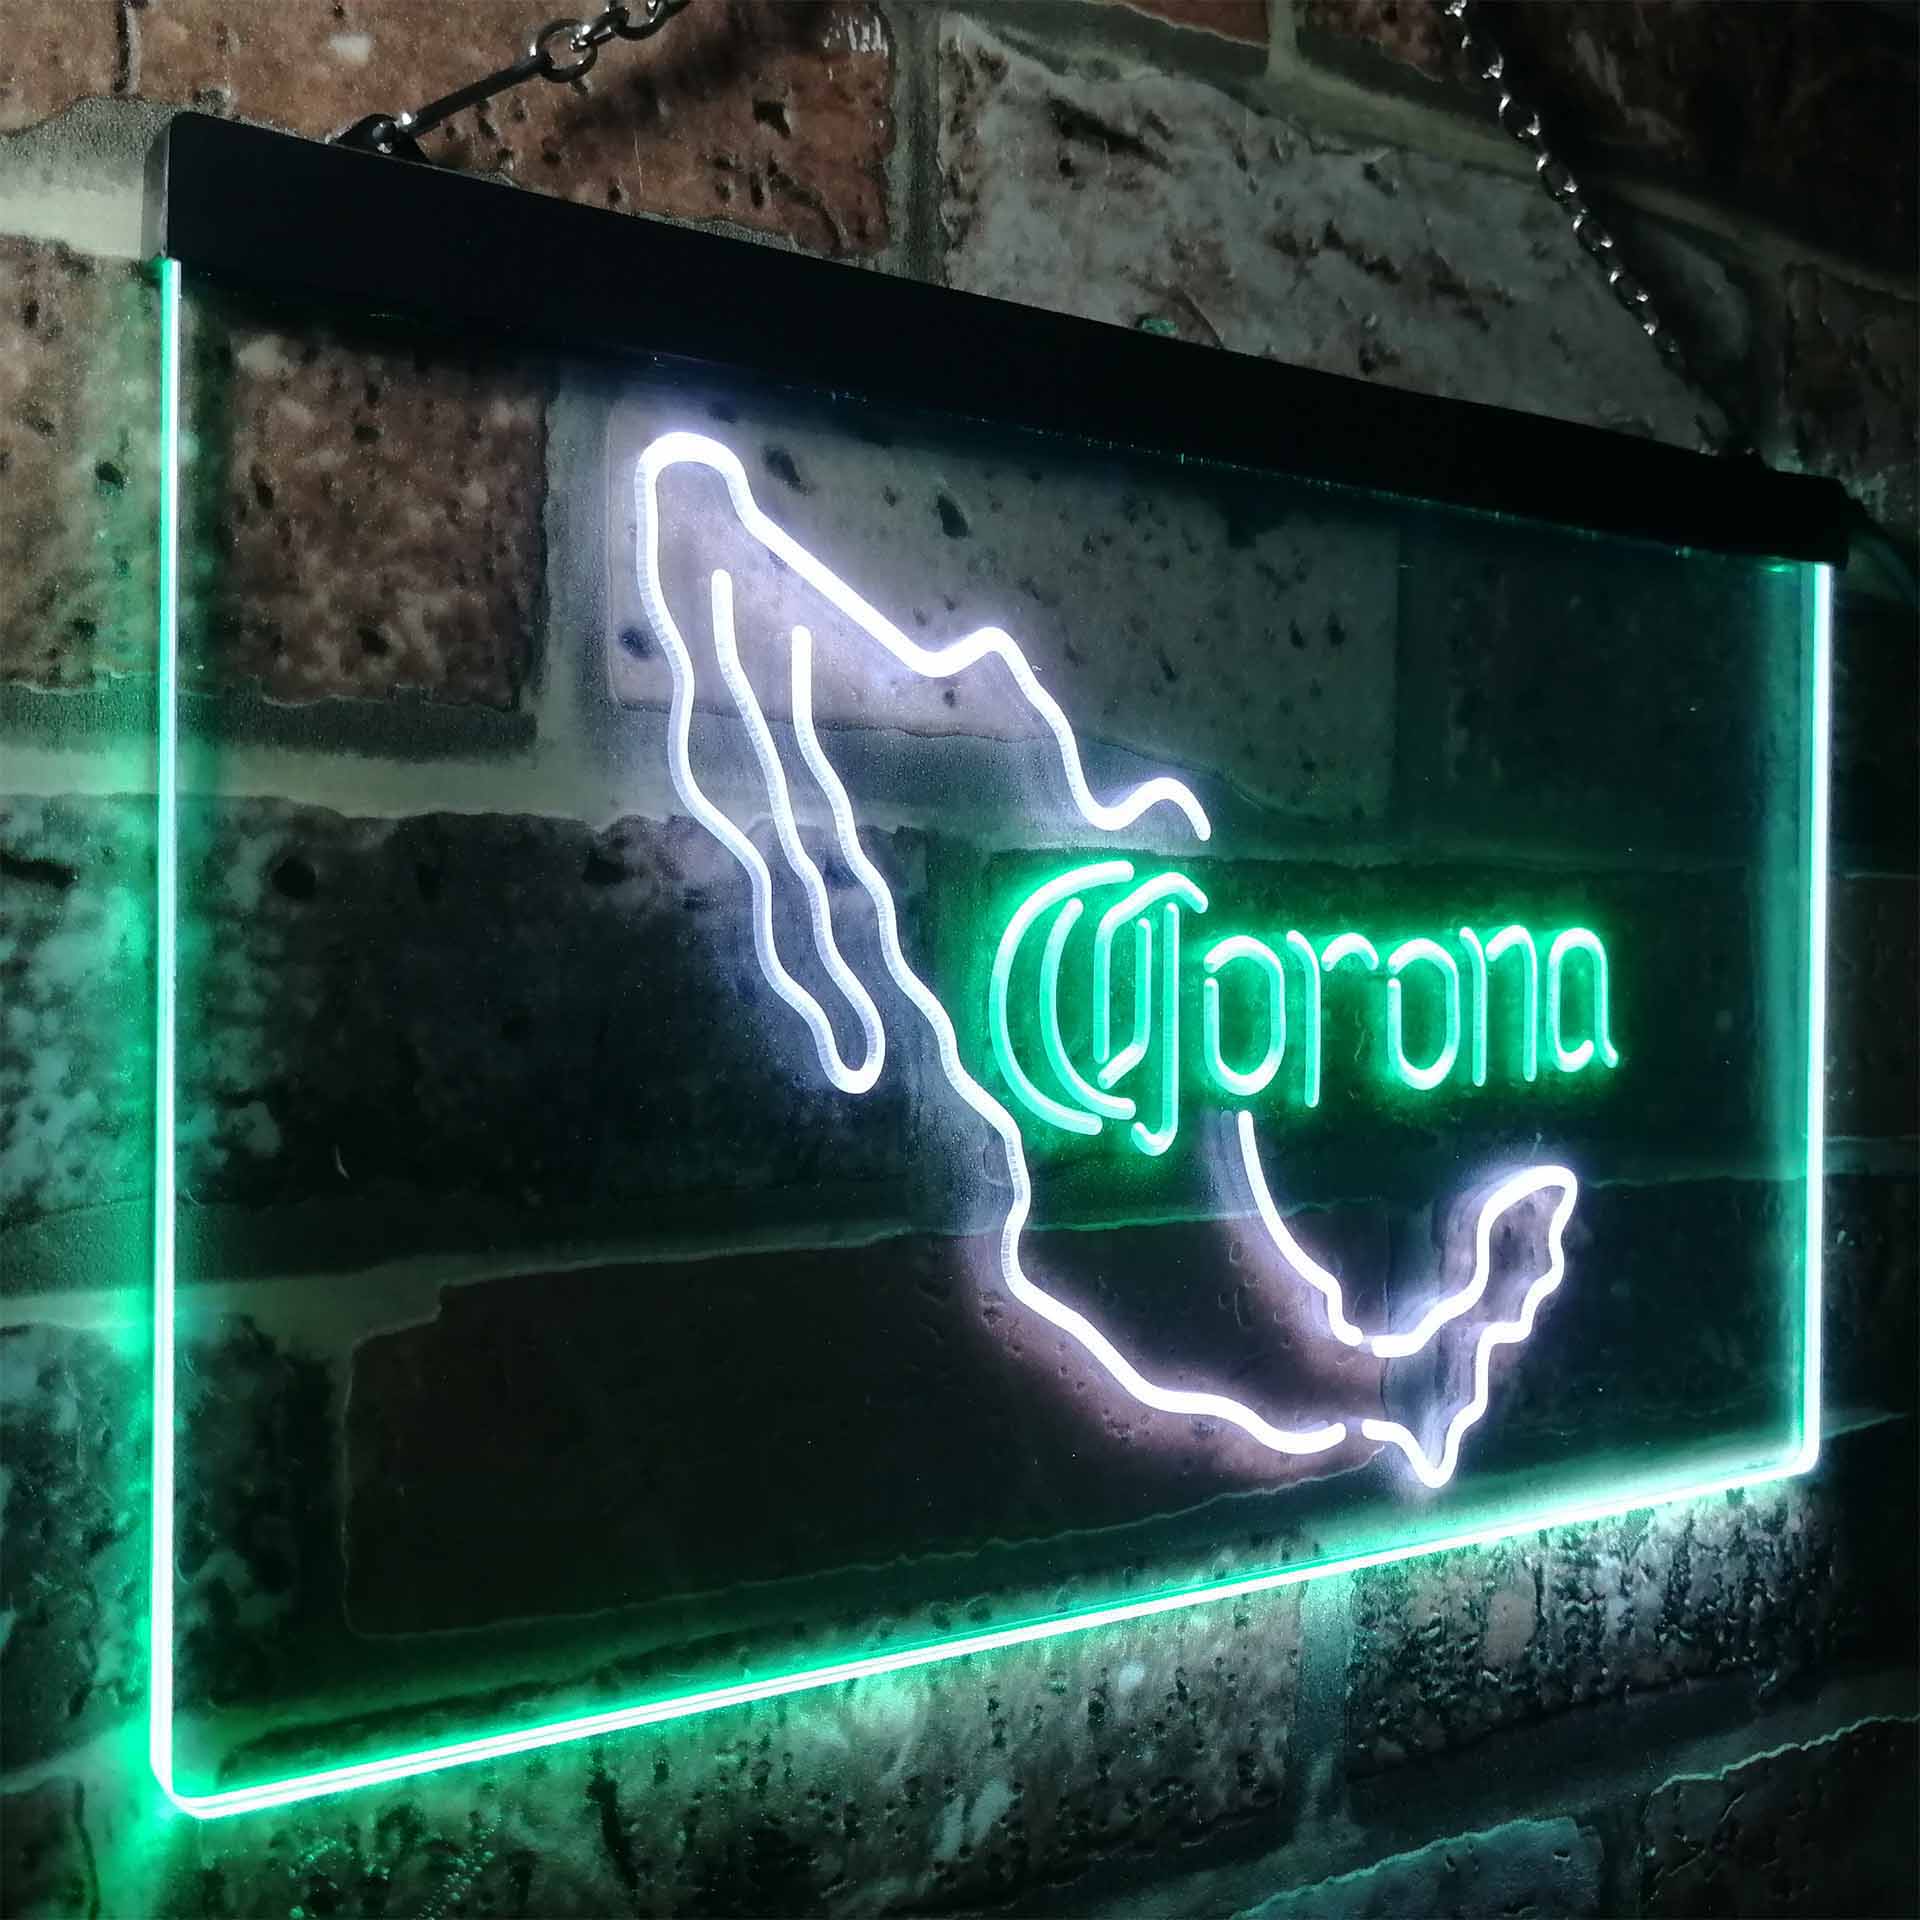 Corona Mexico Cerveza Neon-Like LED Sign